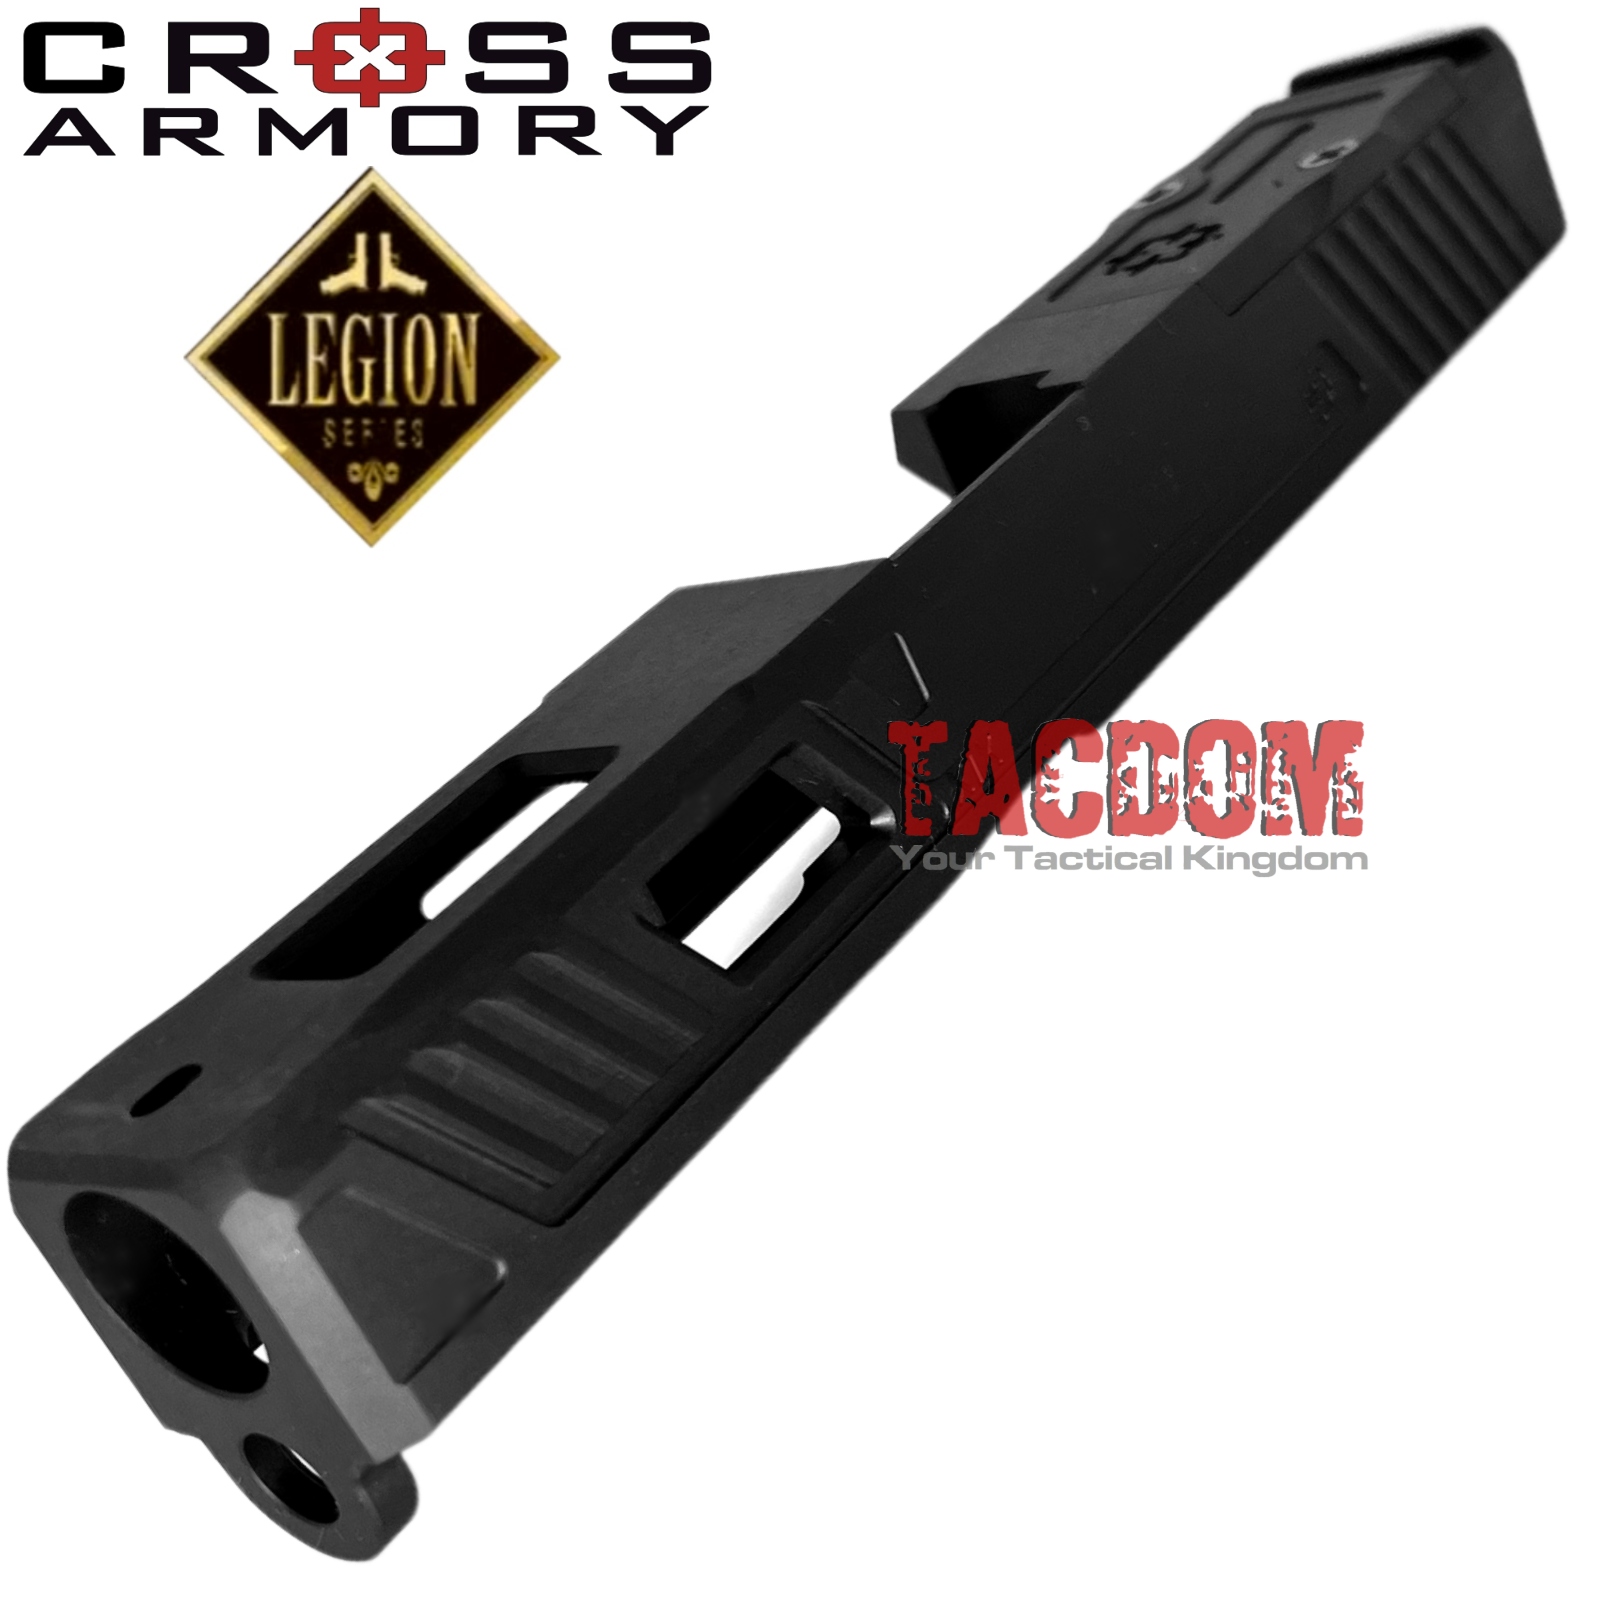 LEGION Slide for Glock G17 by Cross Armory